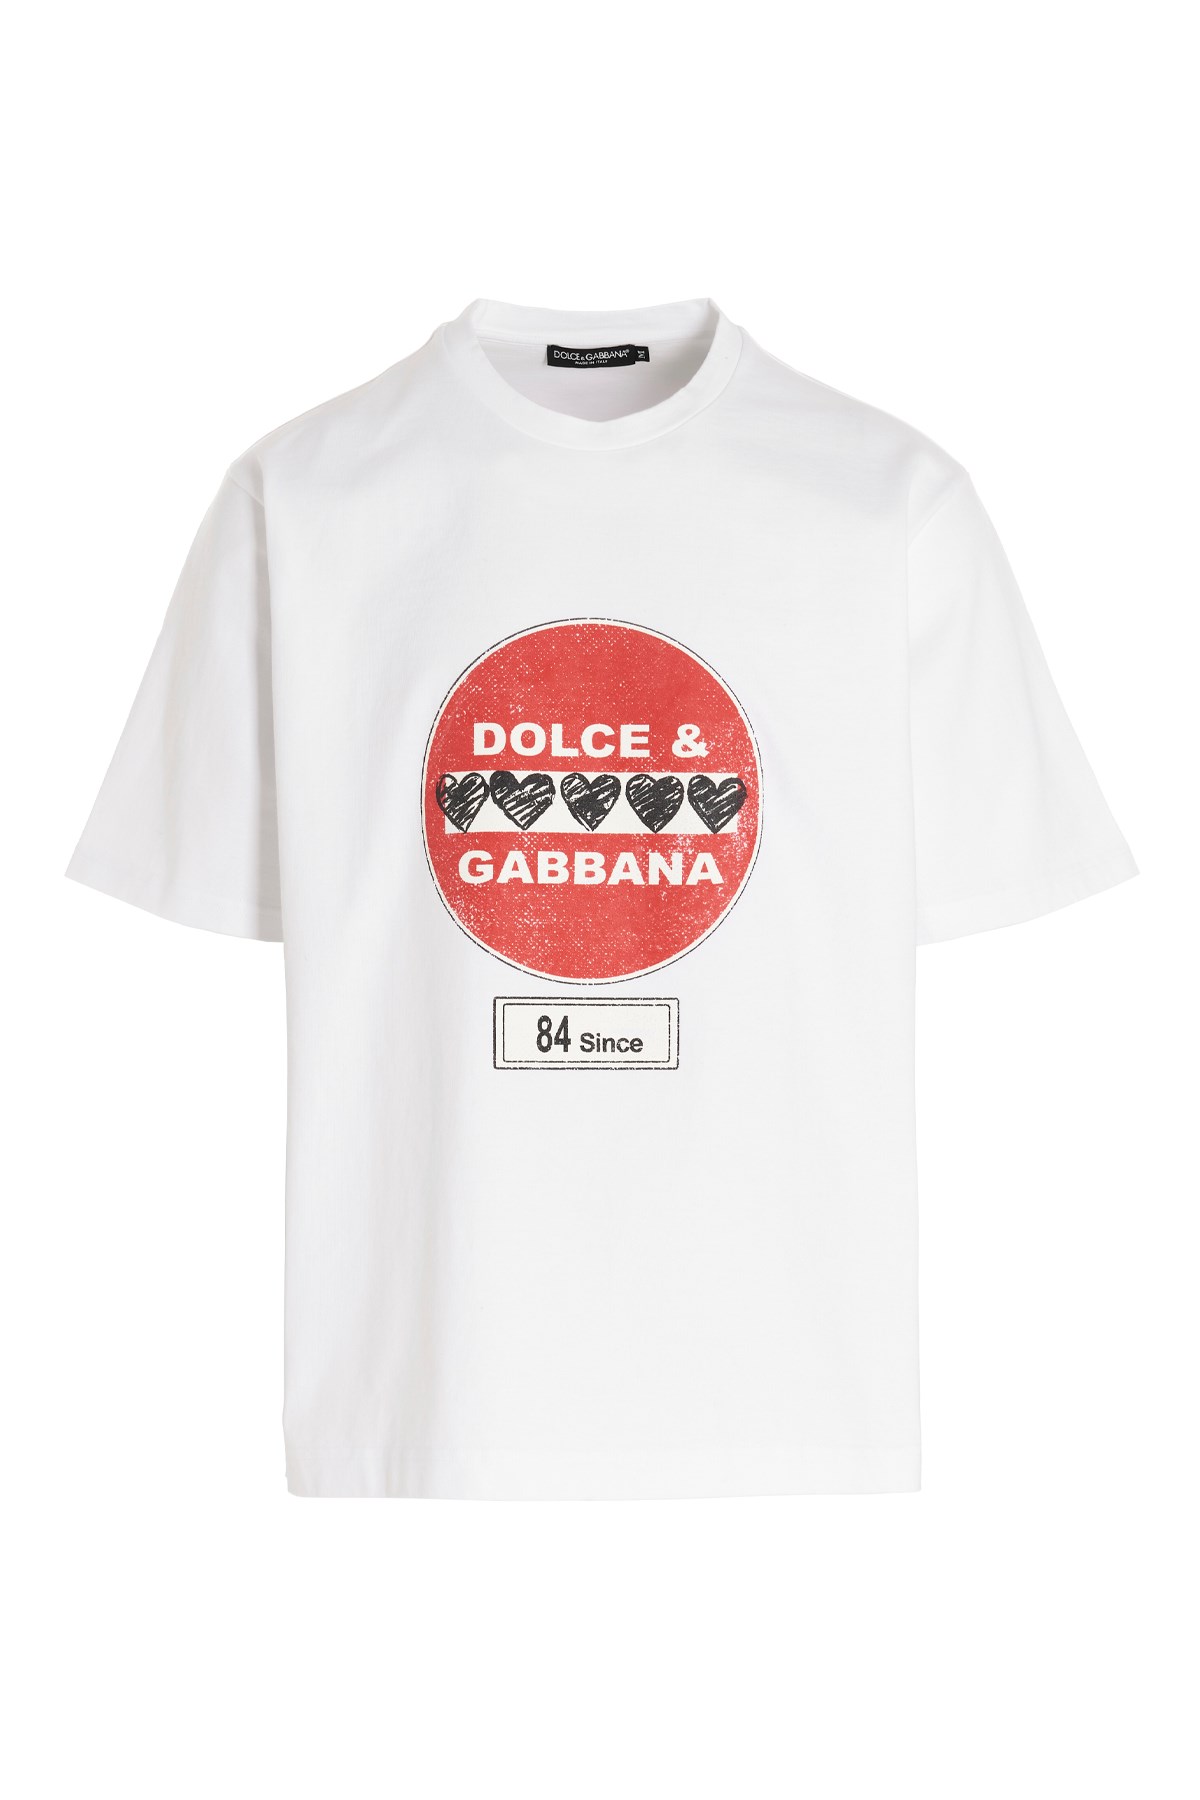 DOLCE & GABBANA T-Shirt 'Cartelli Stradali' Mit Print